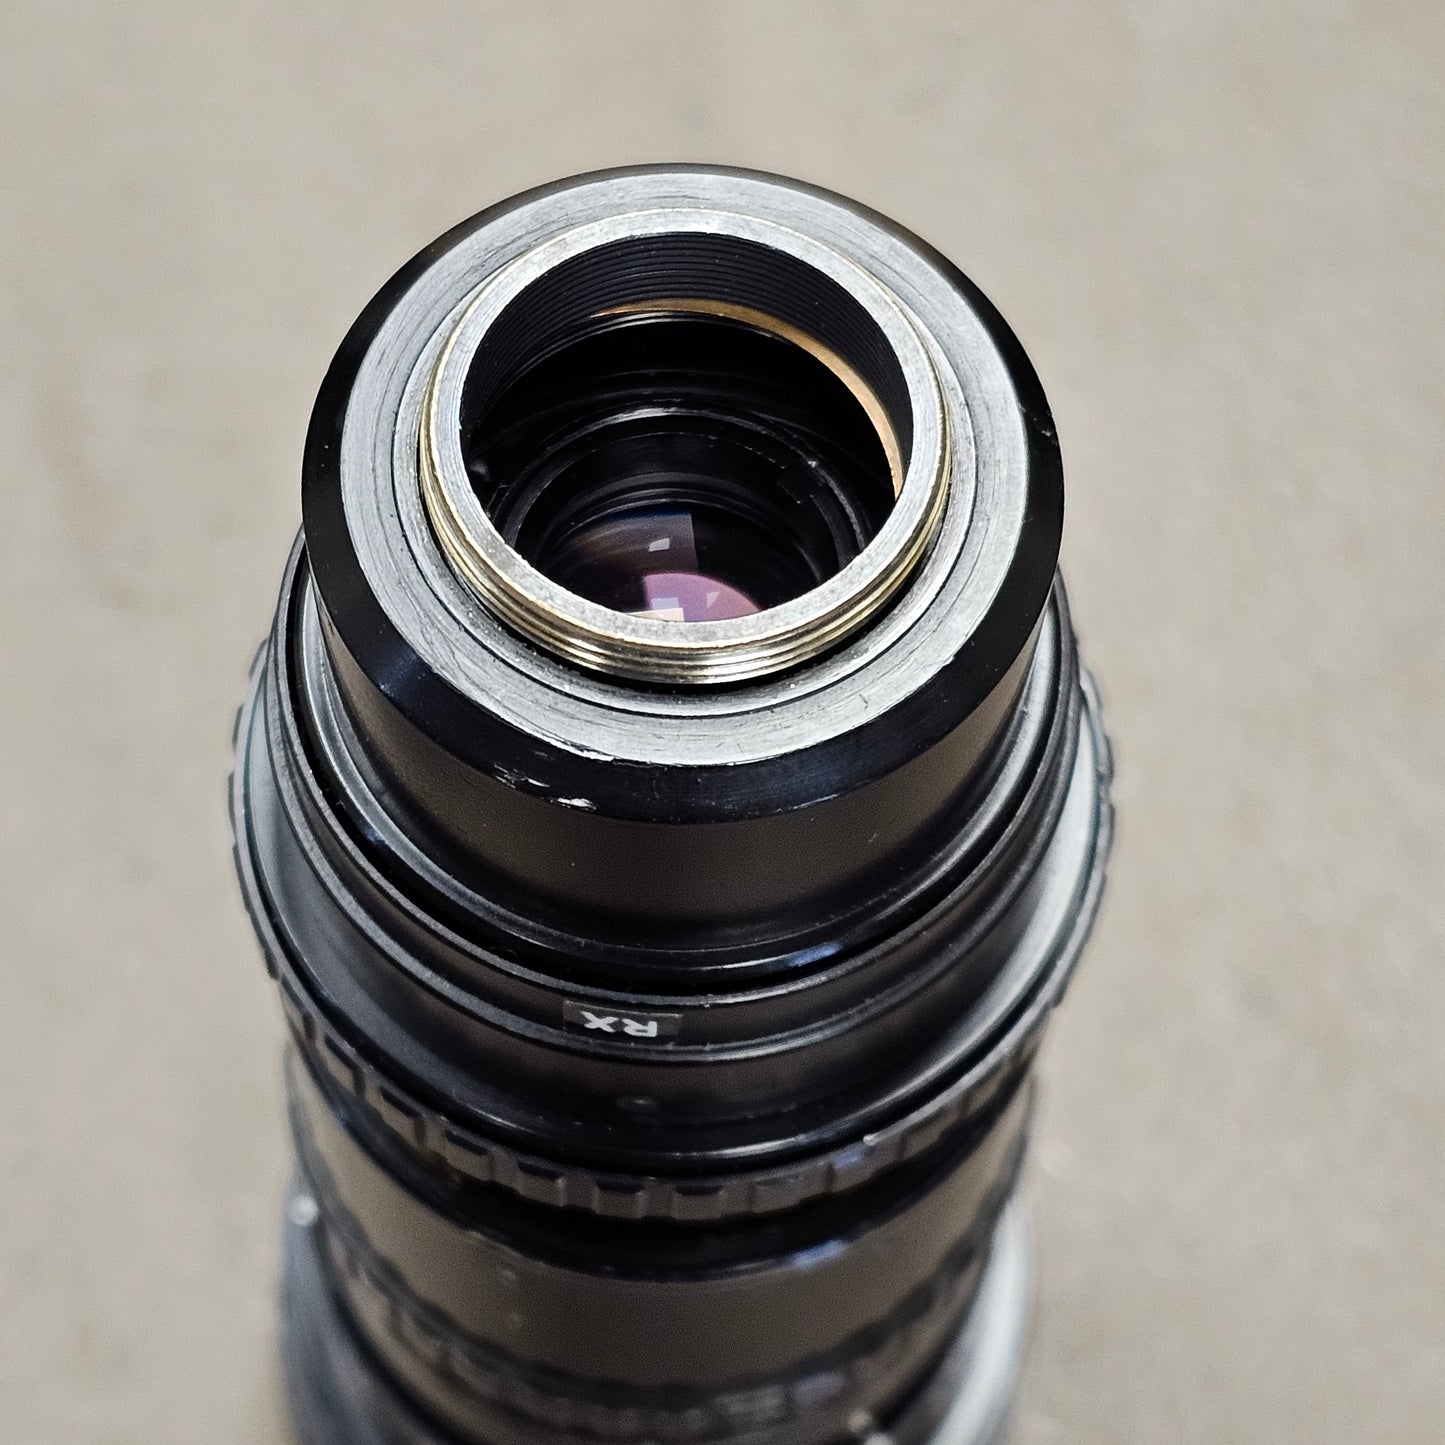 Angenieux 12.5-75mm T2.5 C-Mount Zoom lens RX Type 6x12.5B S# 1309799